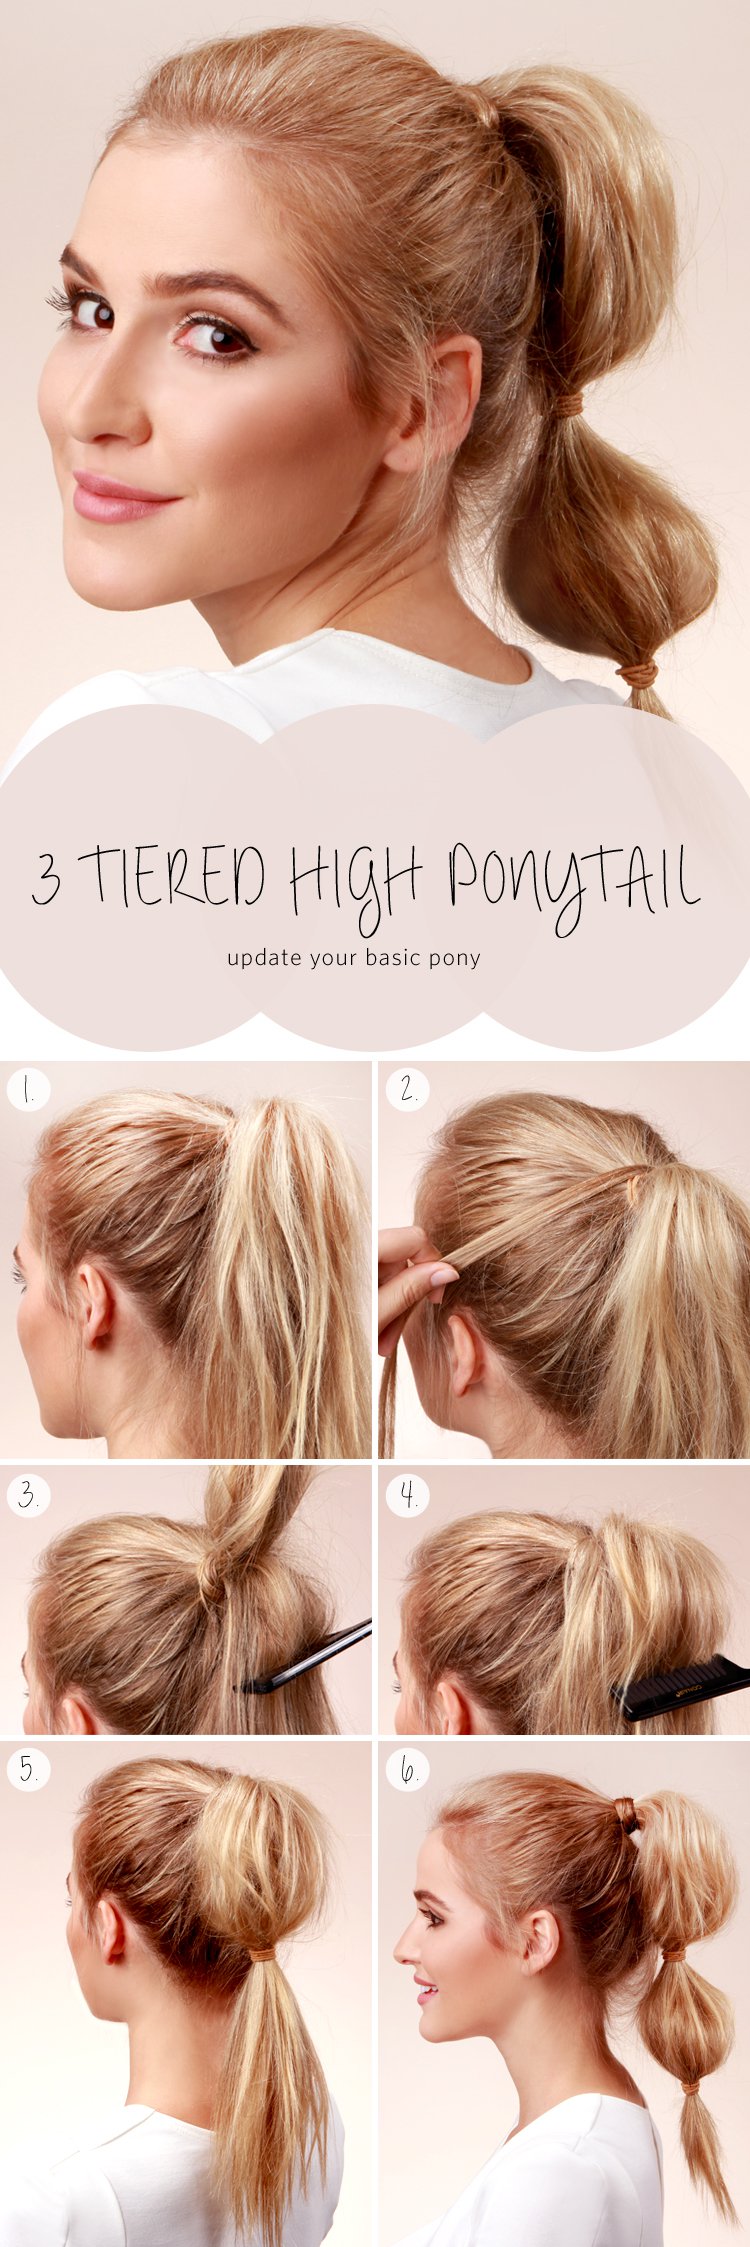 3-tier high ponytail